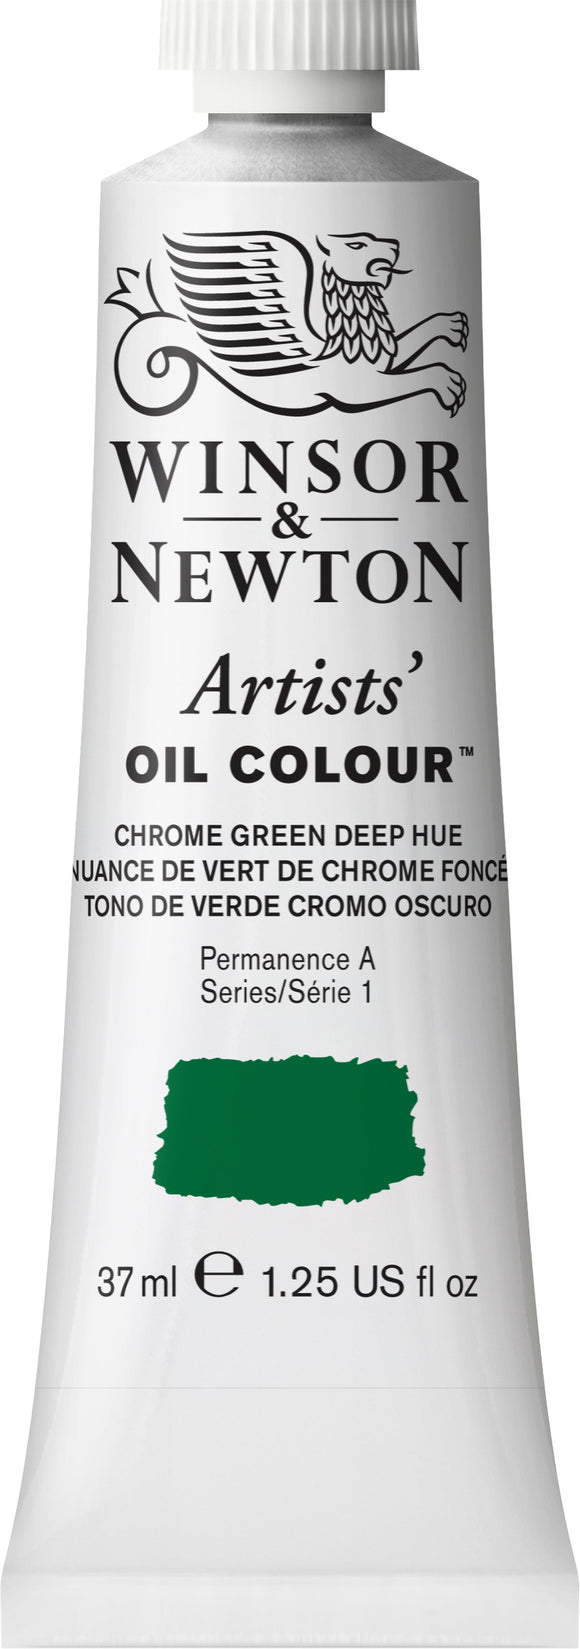 Winsor & Newton Artist Oil Colour Chrome Green Deep Hue 37Ml